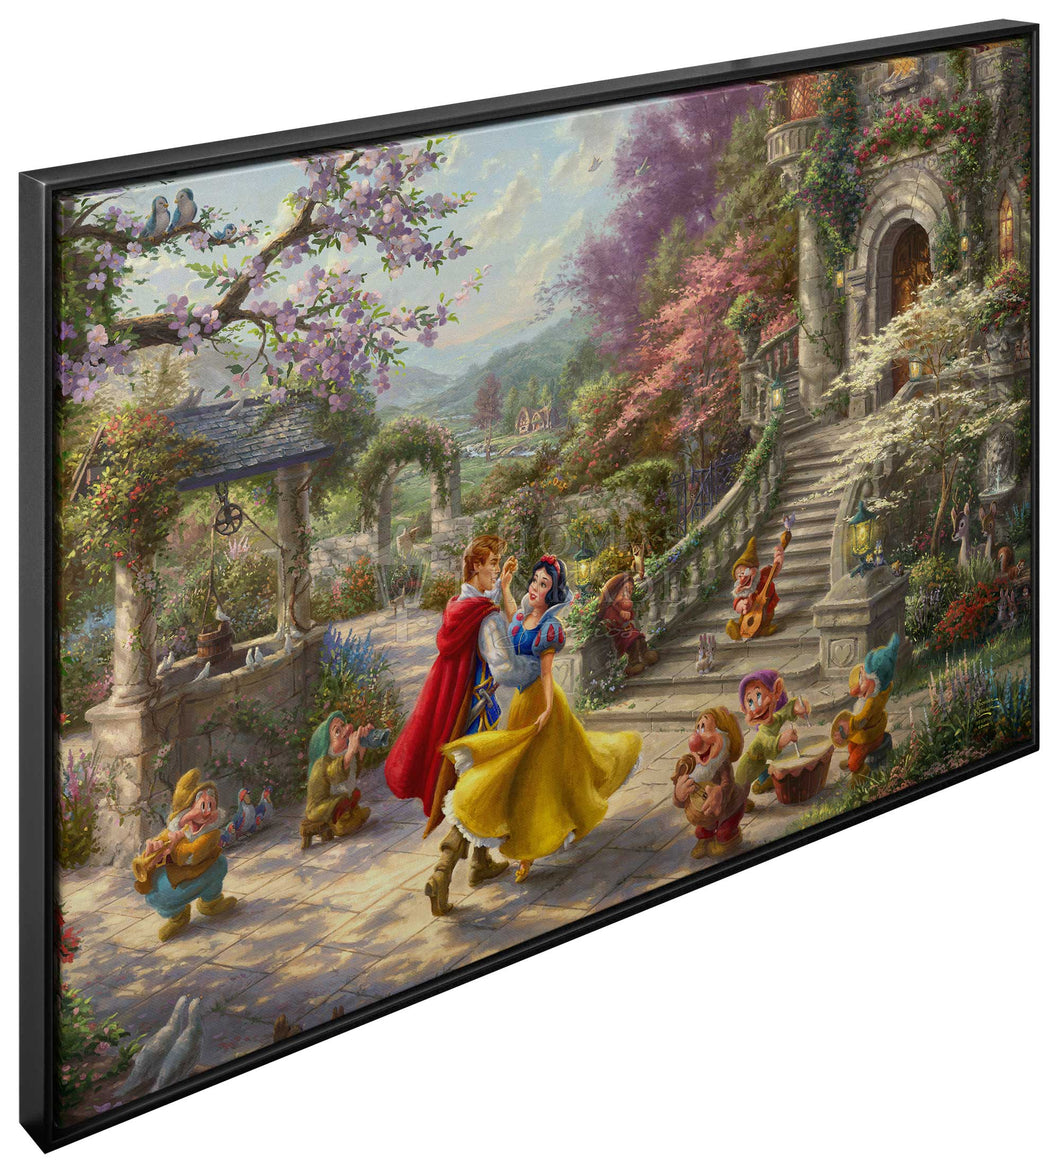 Snow White Dancing in the Sunlight - Canvas Wall Murals - ArtOfEntertainment.com